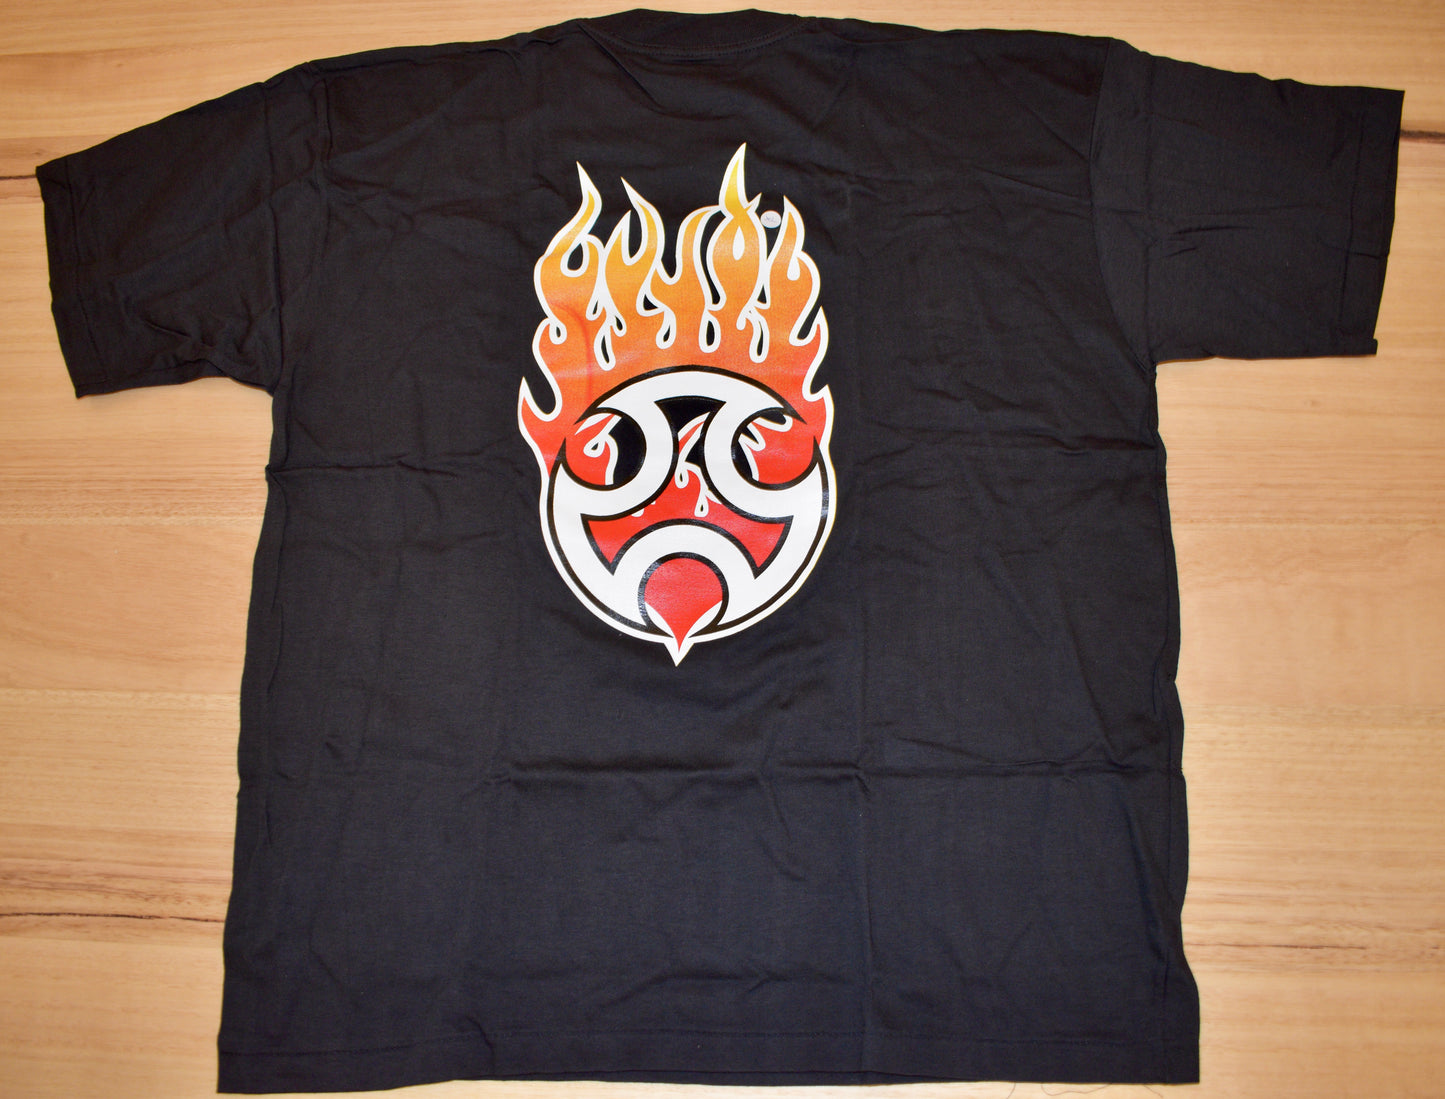 OG Volatile Visions Flame logo Tshirt